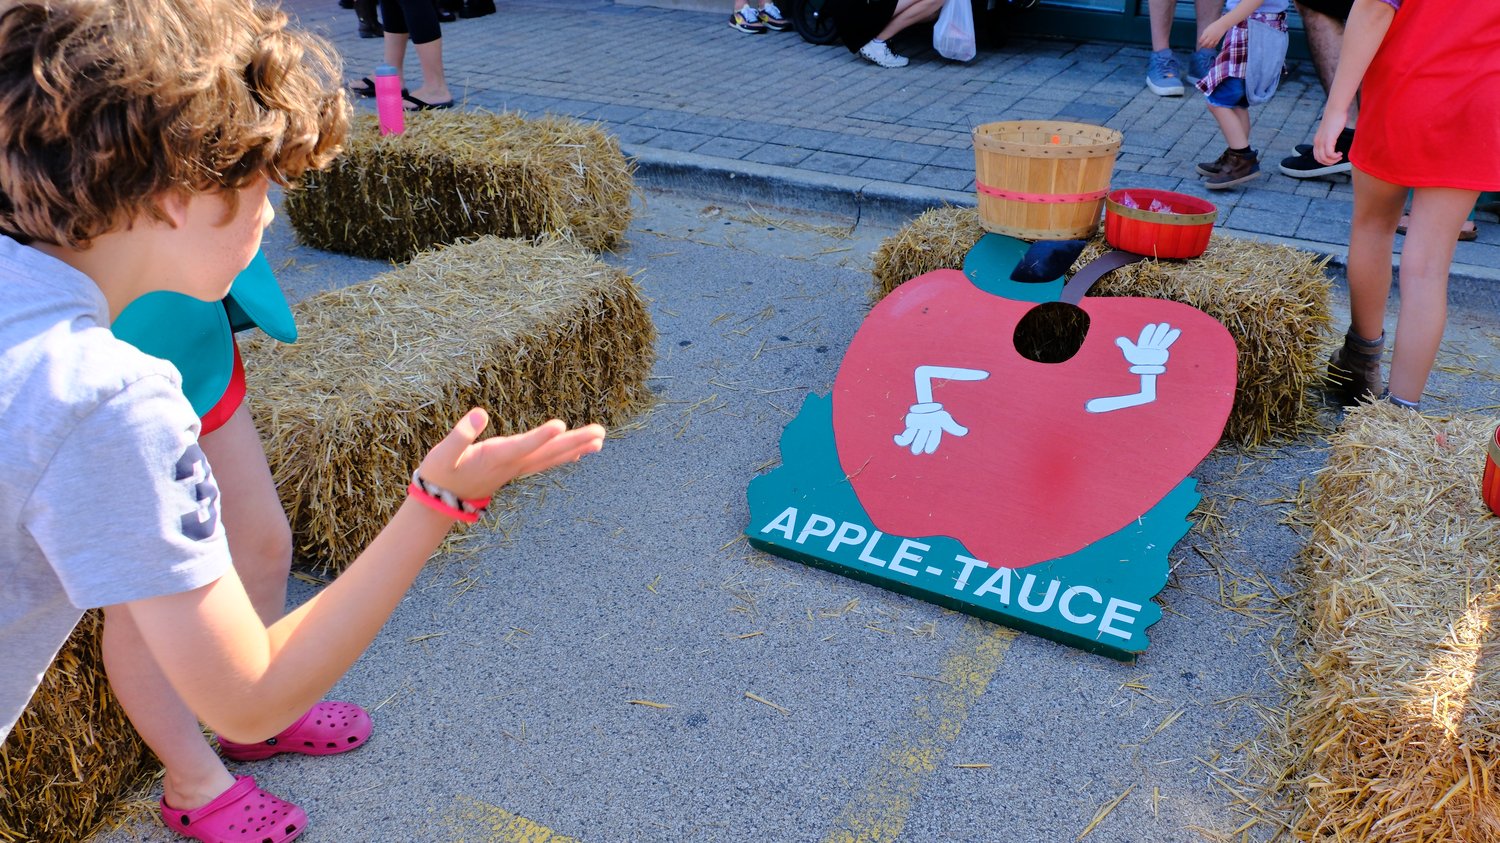 Apple-tauce cornhole game.